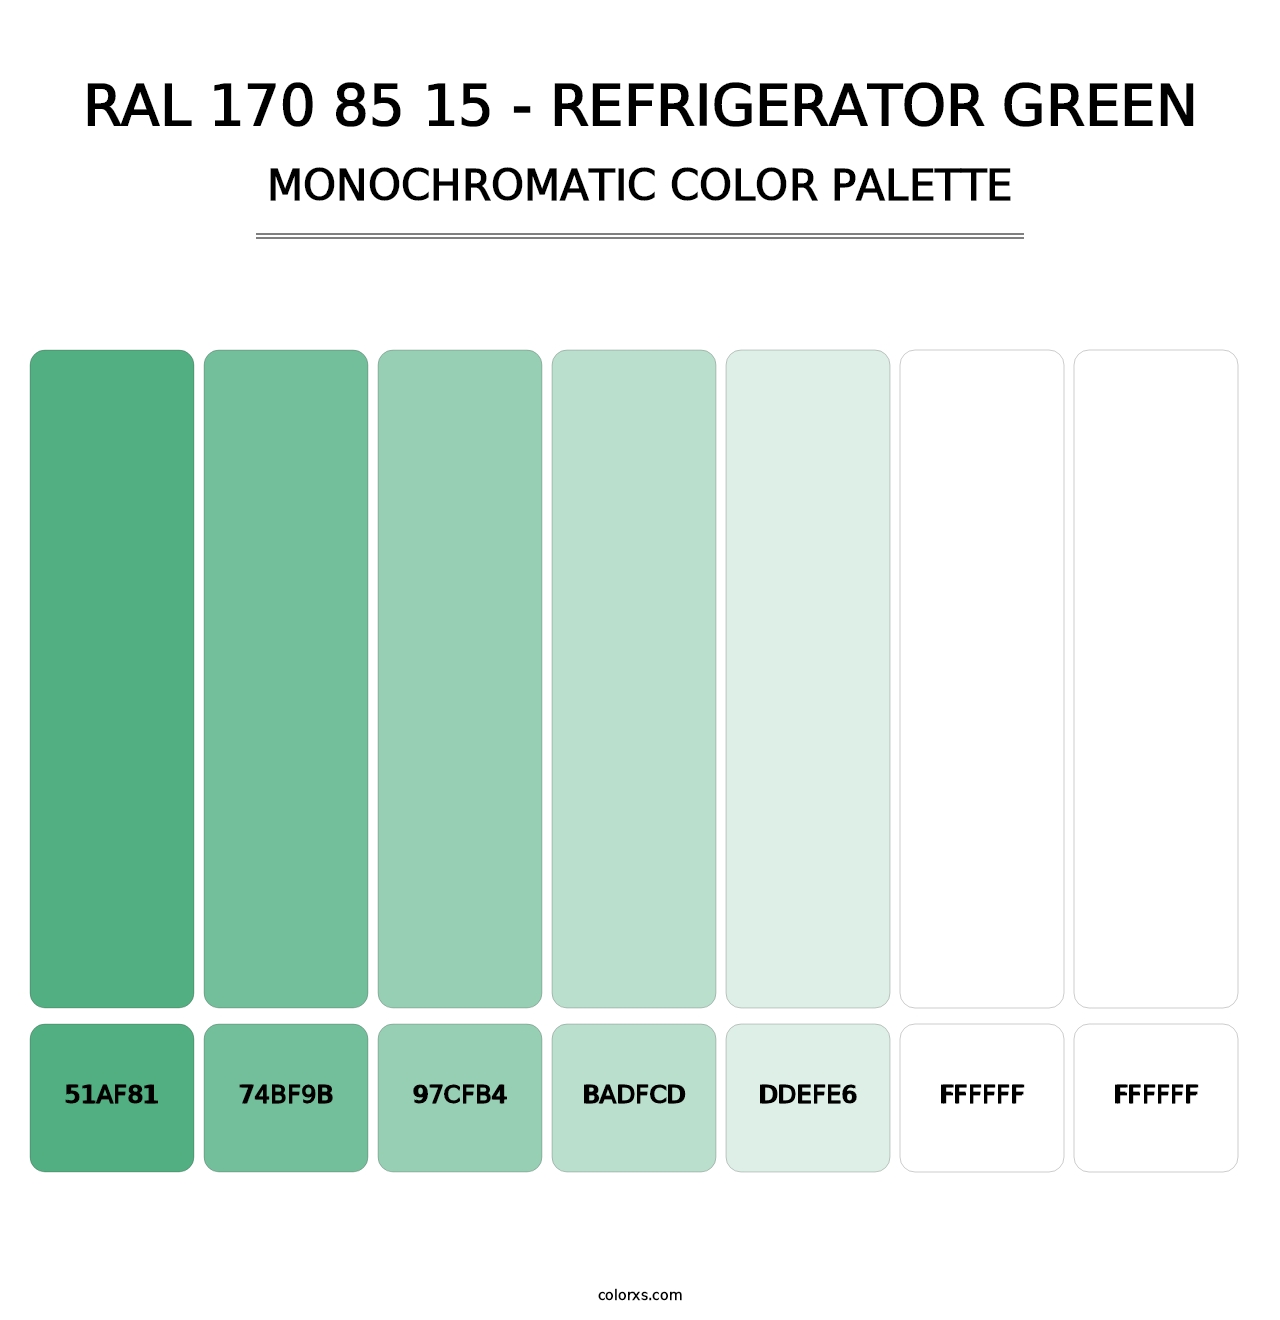 RAL 170 85 15 - Refrigerator Green - Monochromatic Color Palette